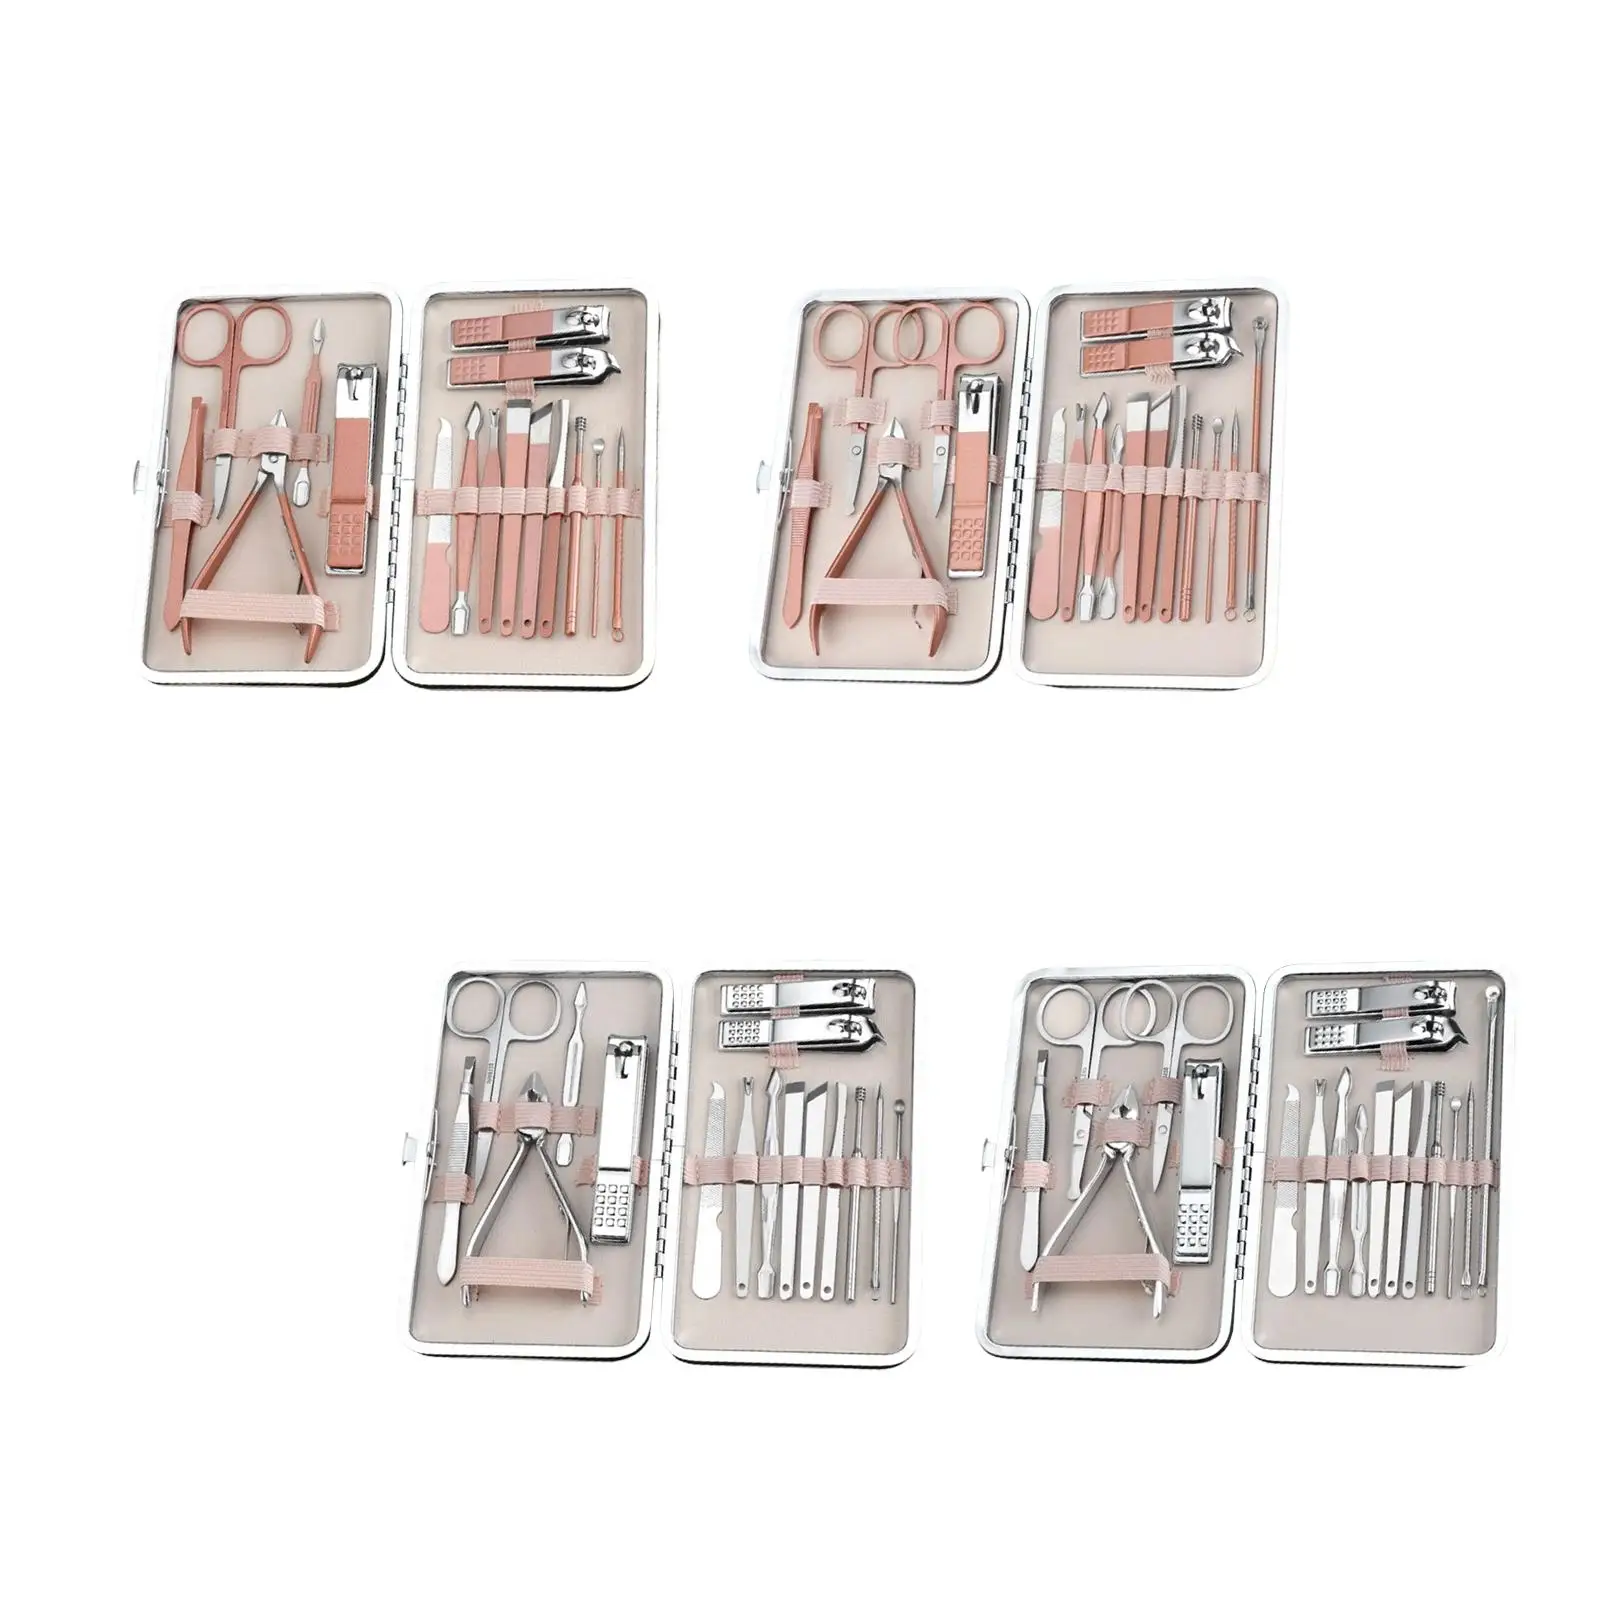 Manicure Set Fingernails Toenails Care Nail Clippers Grooming Kit for beauty Salon